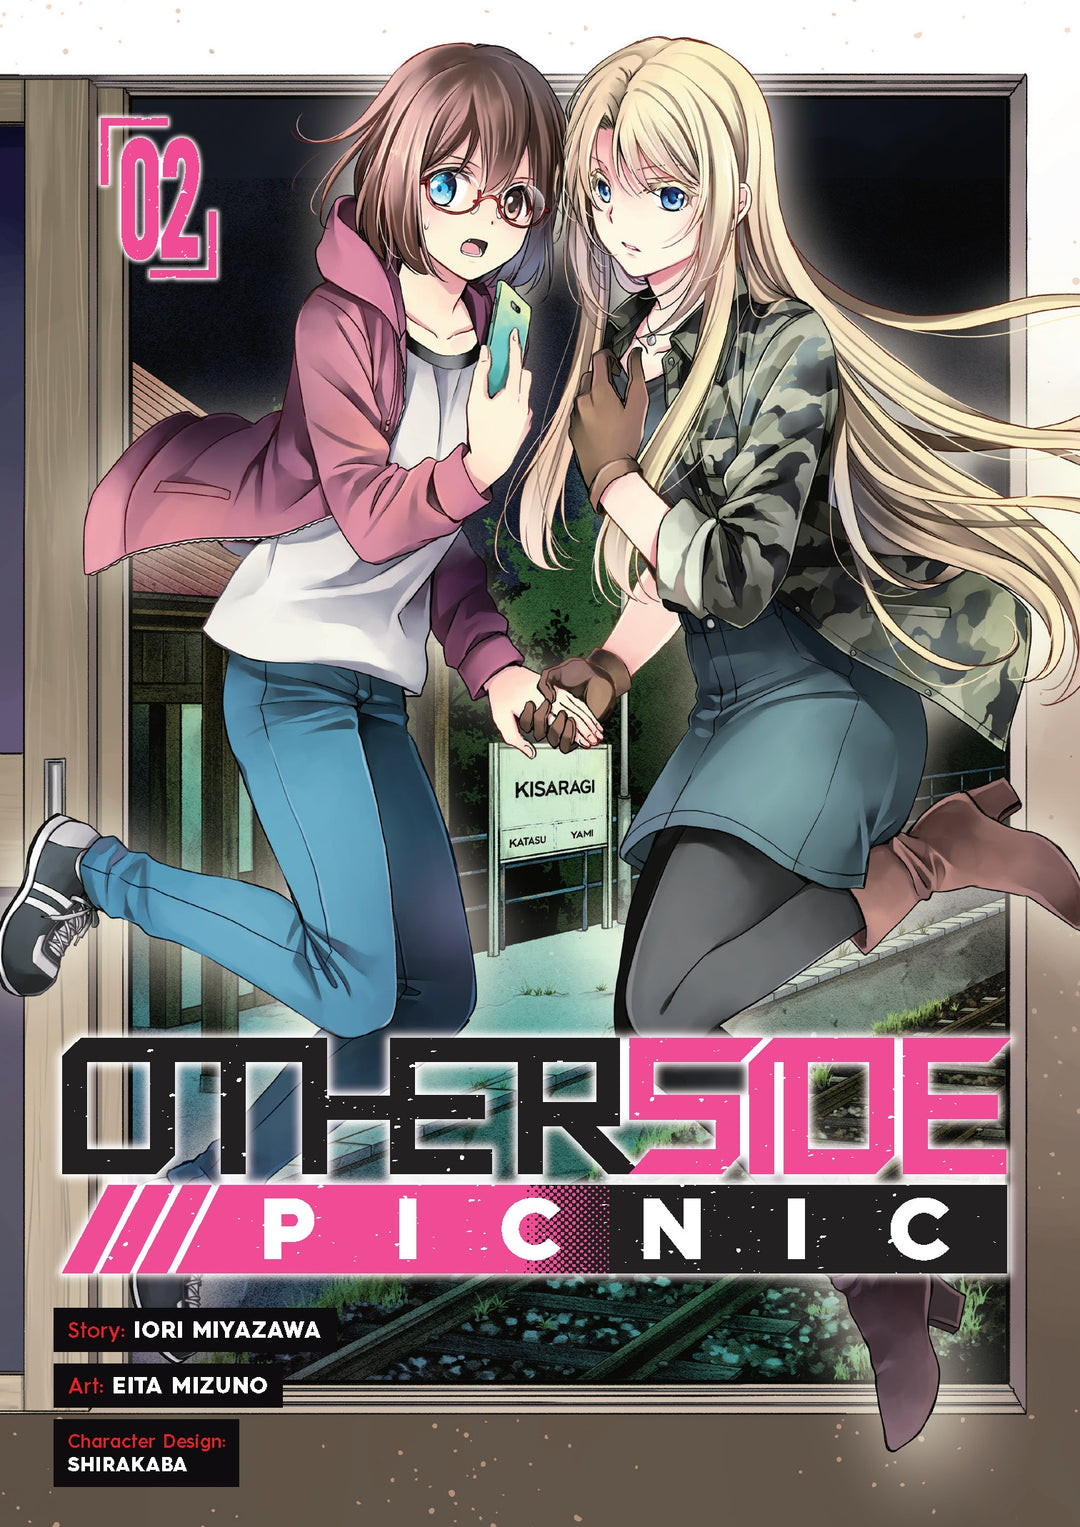 Otherside Picnic (Manga), Vol. 02